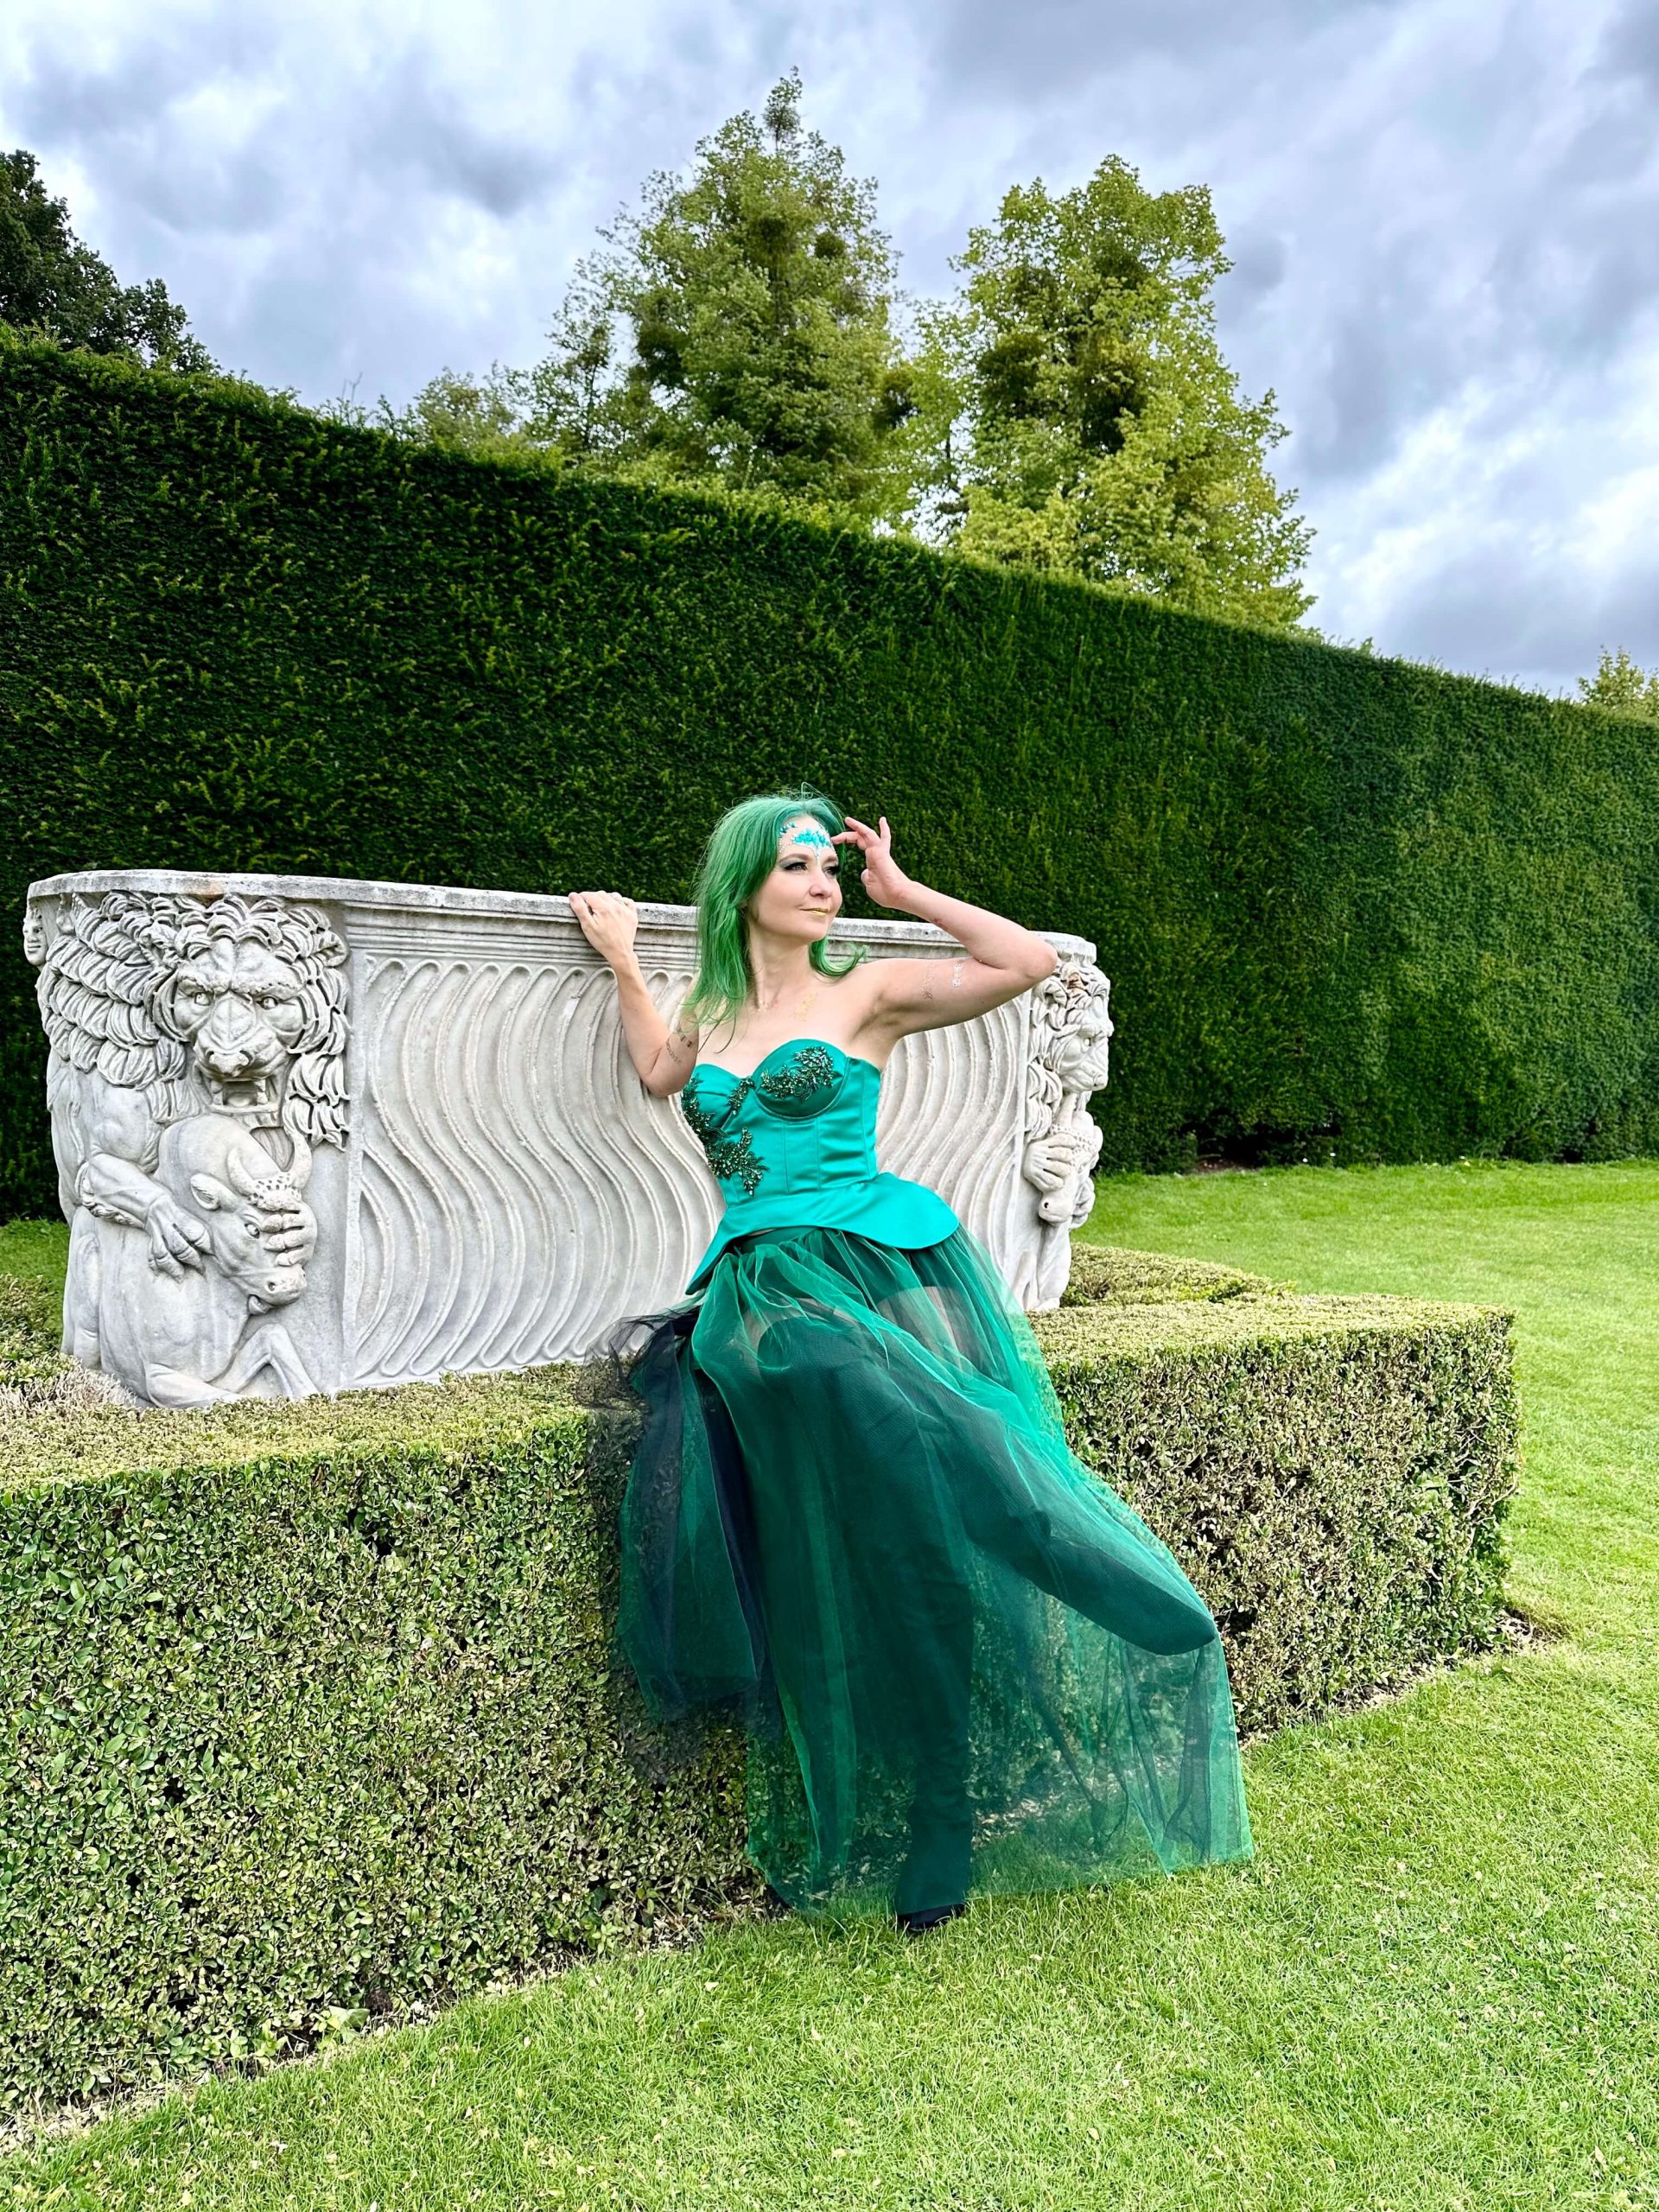 Renata Rimke fashion designer wearing green corset and green tulle skirt